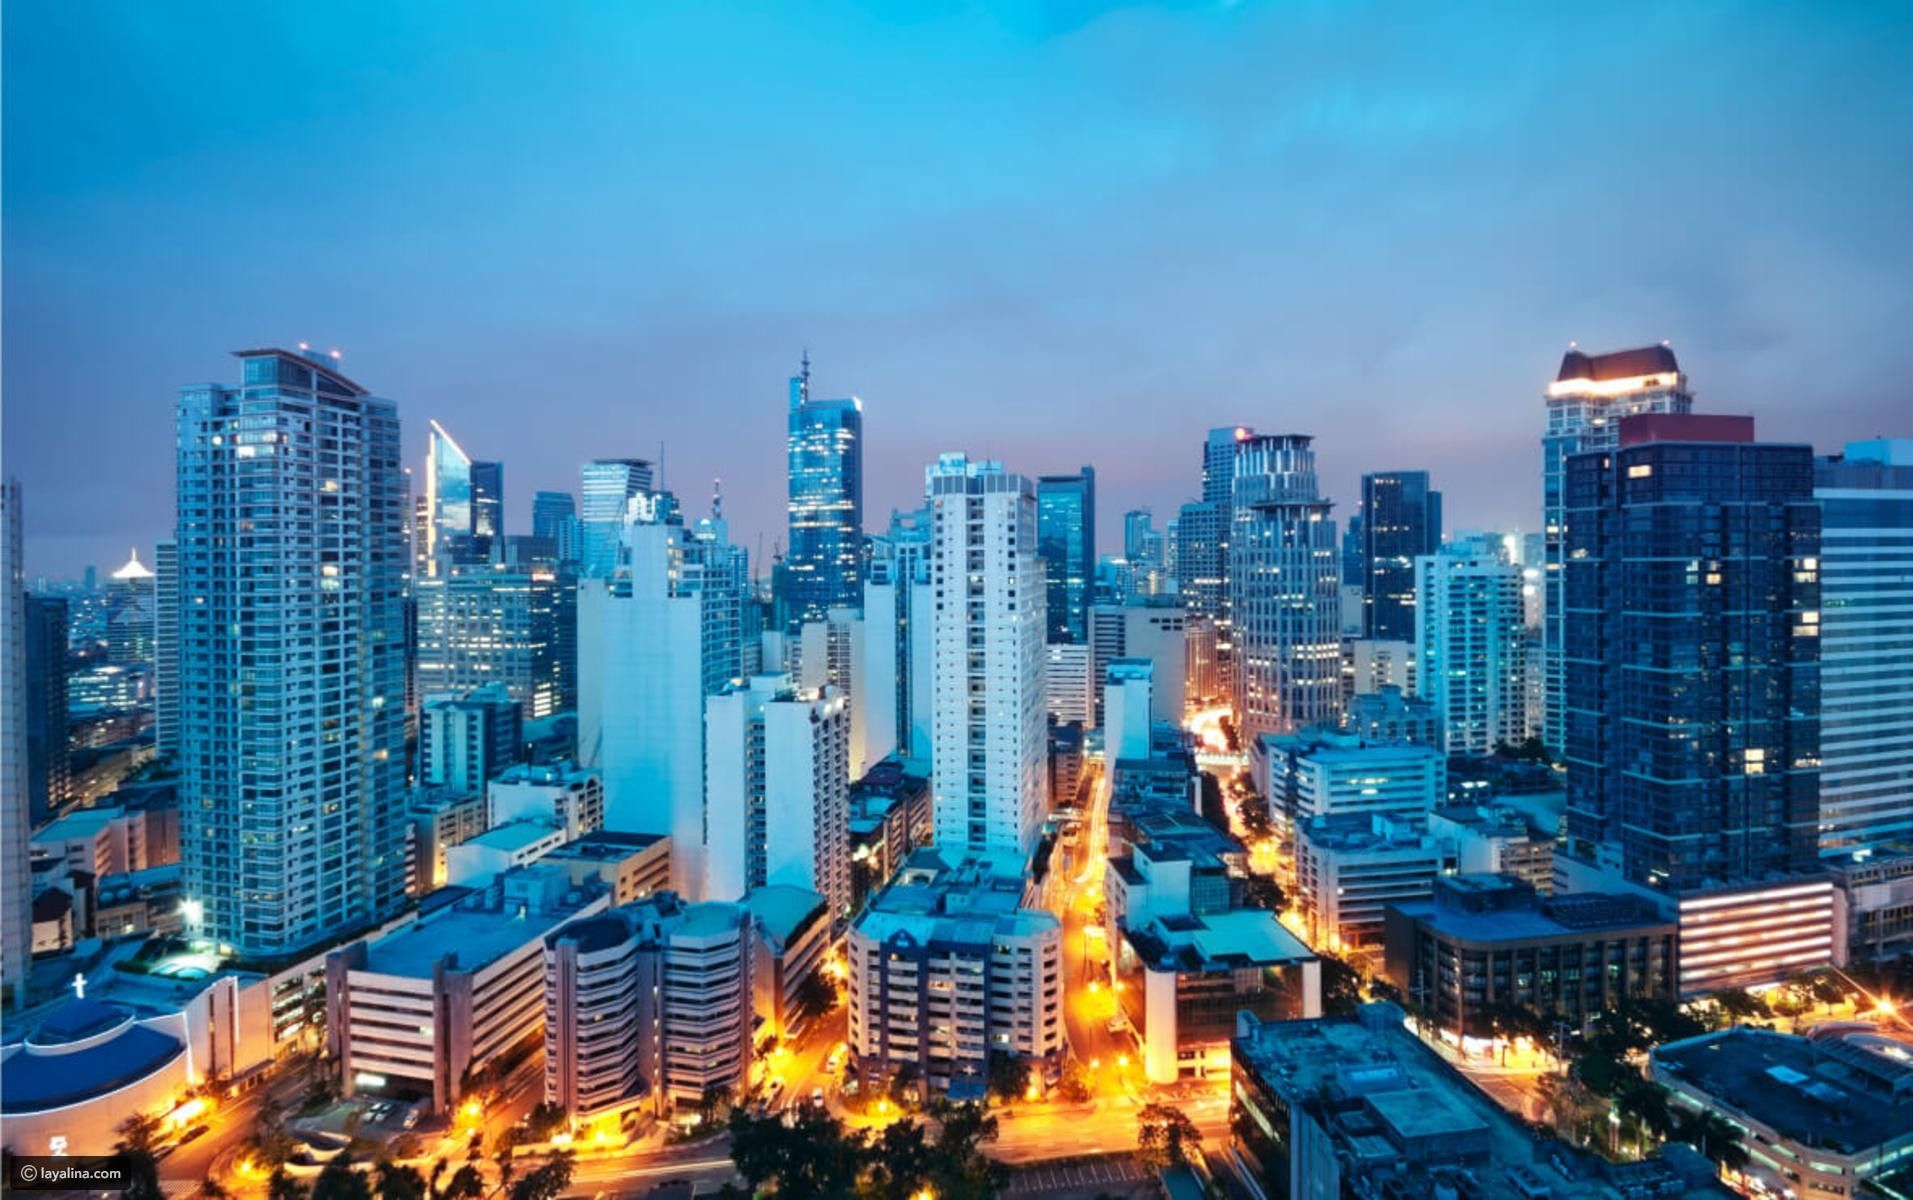 Tourist areas near Manila … Find the nearest tourist areas to Manila